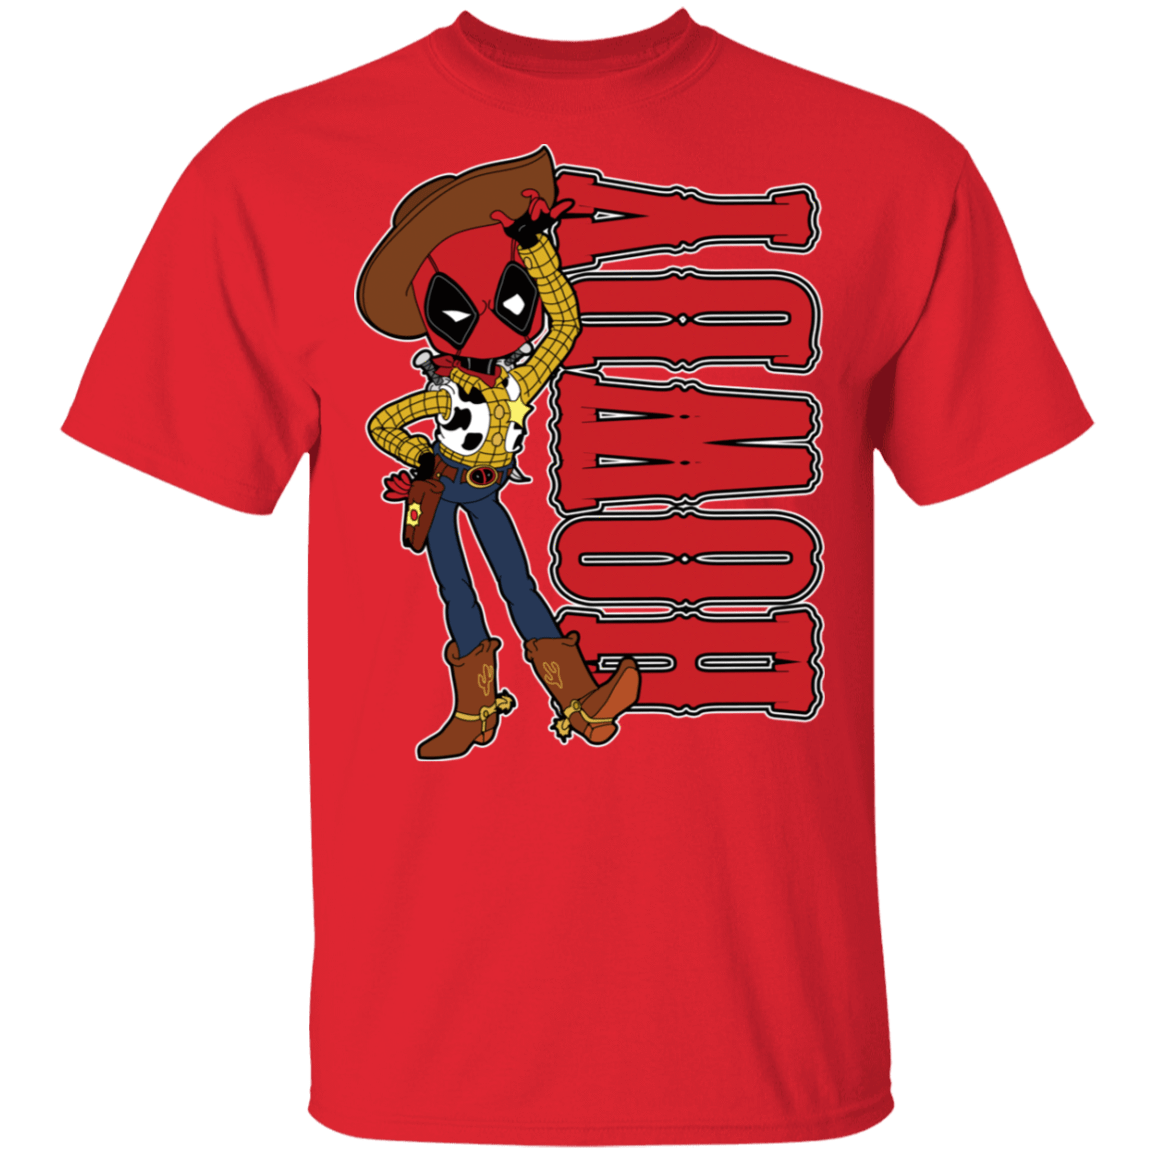 T-Shirts Red / S Sherrif Deadpool T-Shirt